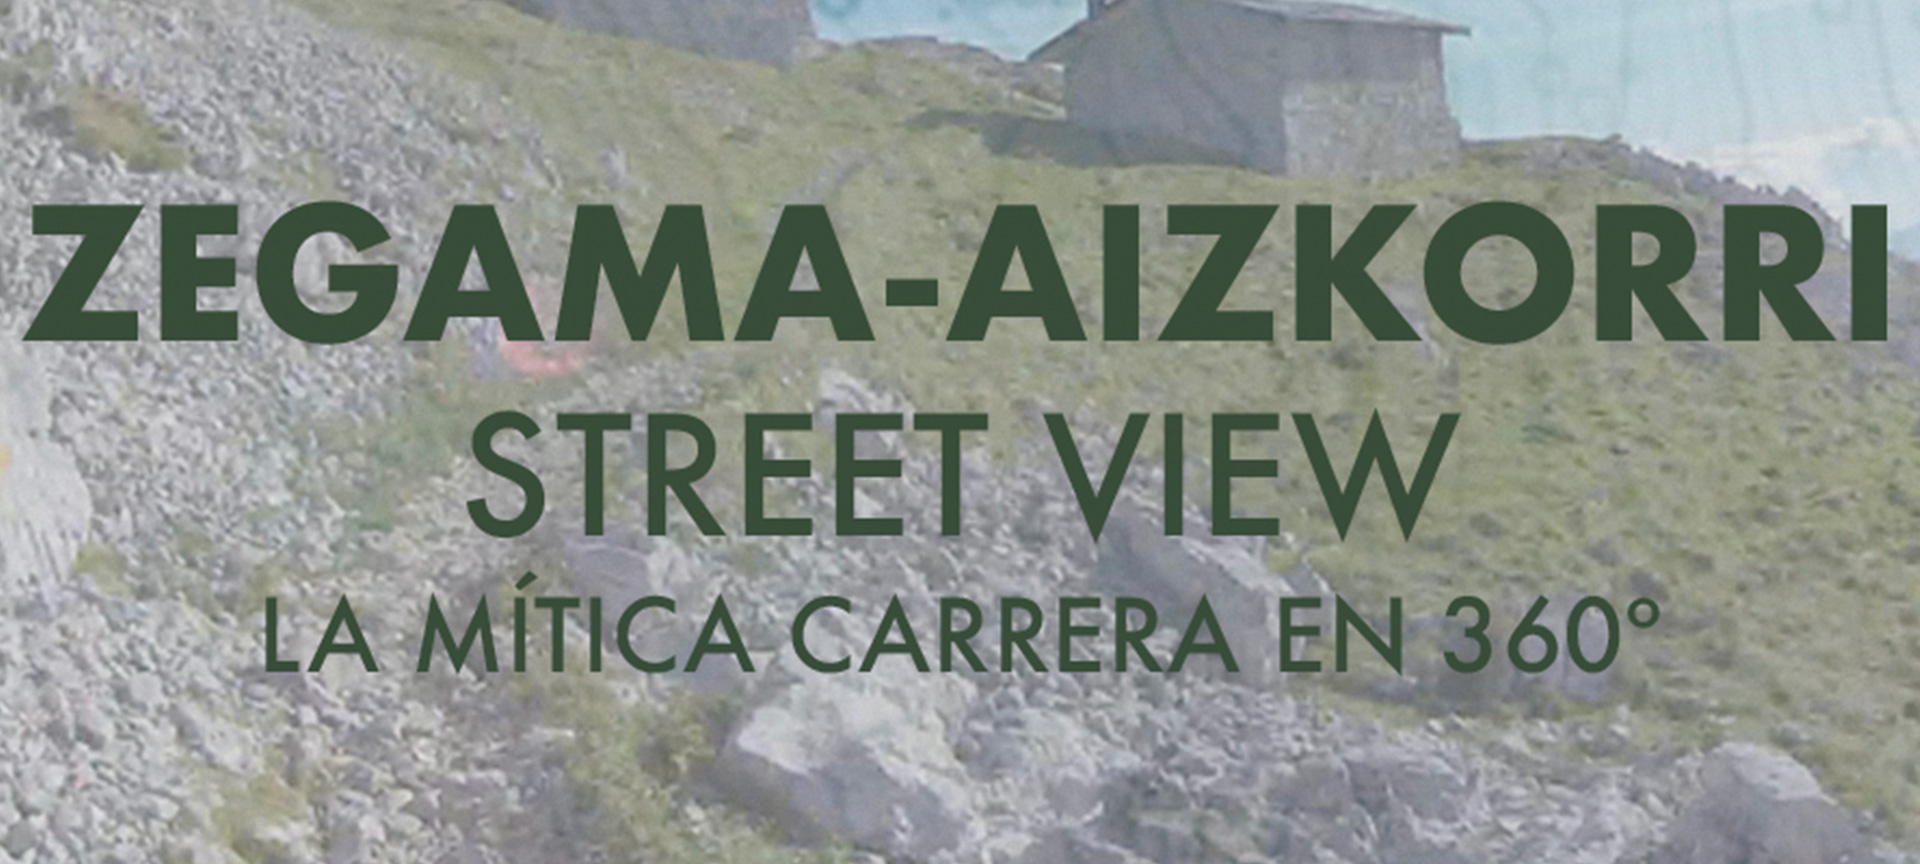 La Zegama-Aizkorri ahora disponible en Google Street View